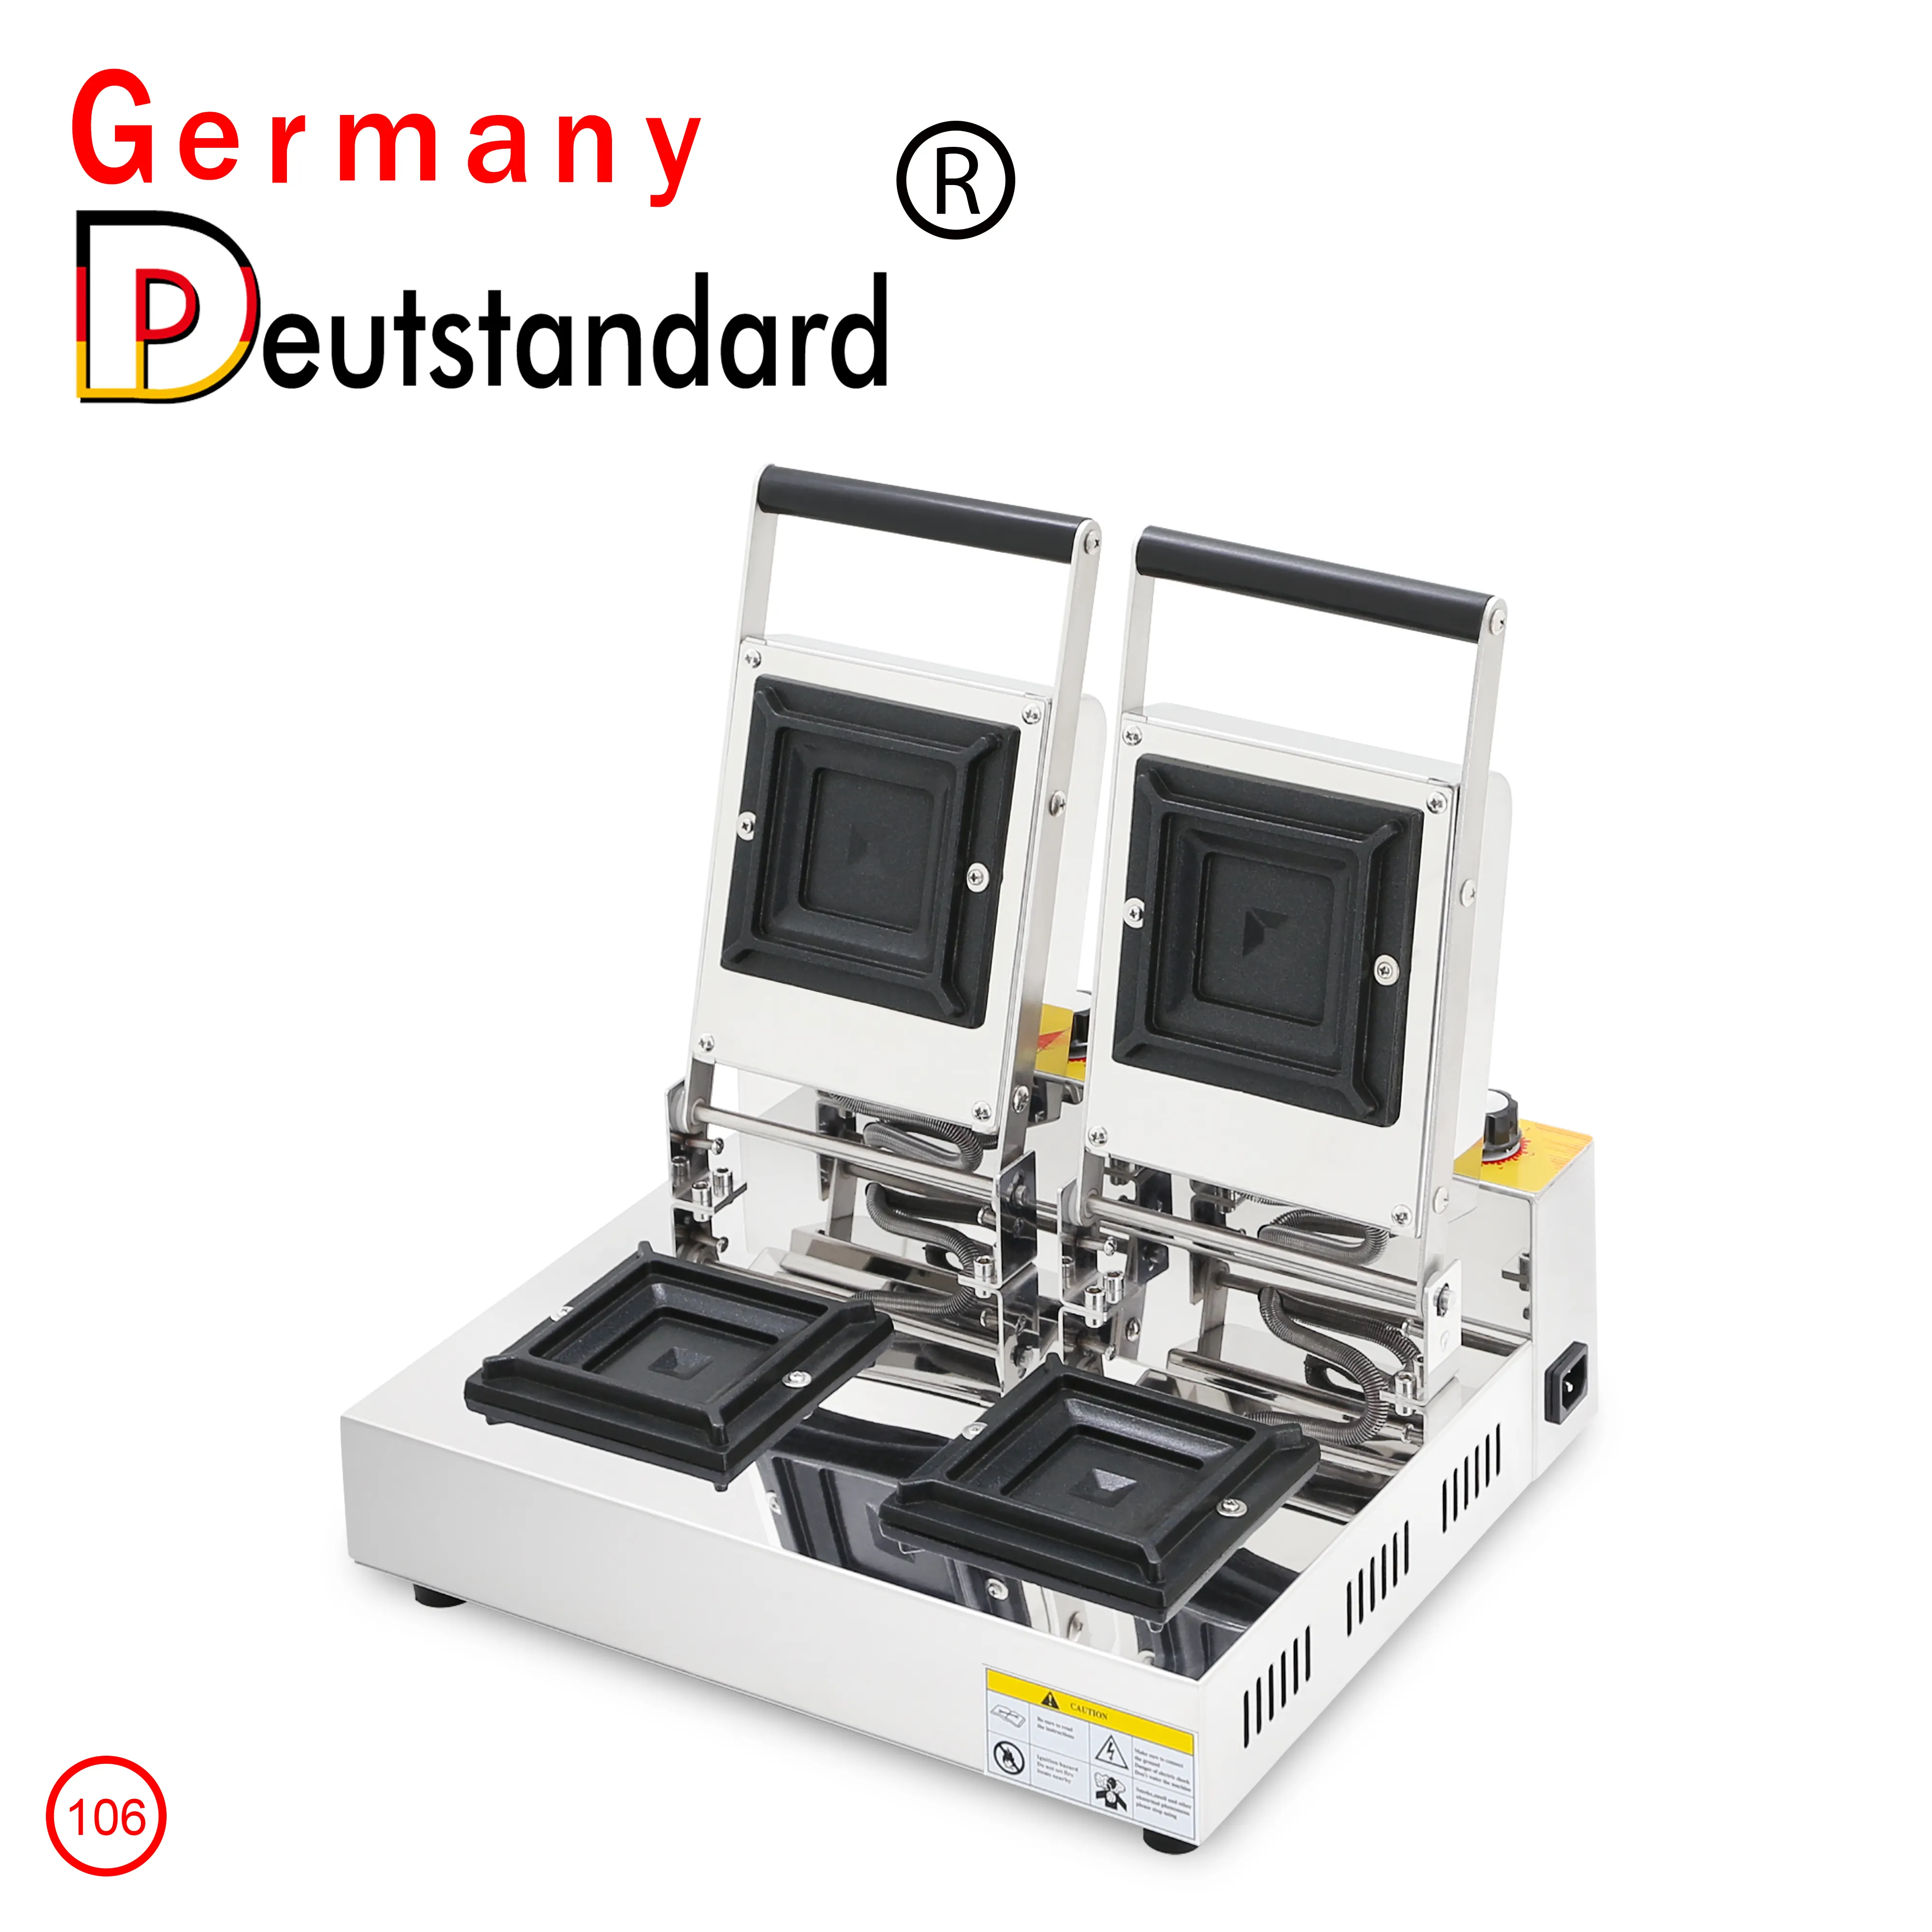 Alemanha Deutstandard lanche máquinas de fazer pão elétrica torradeira sanduicheira mini